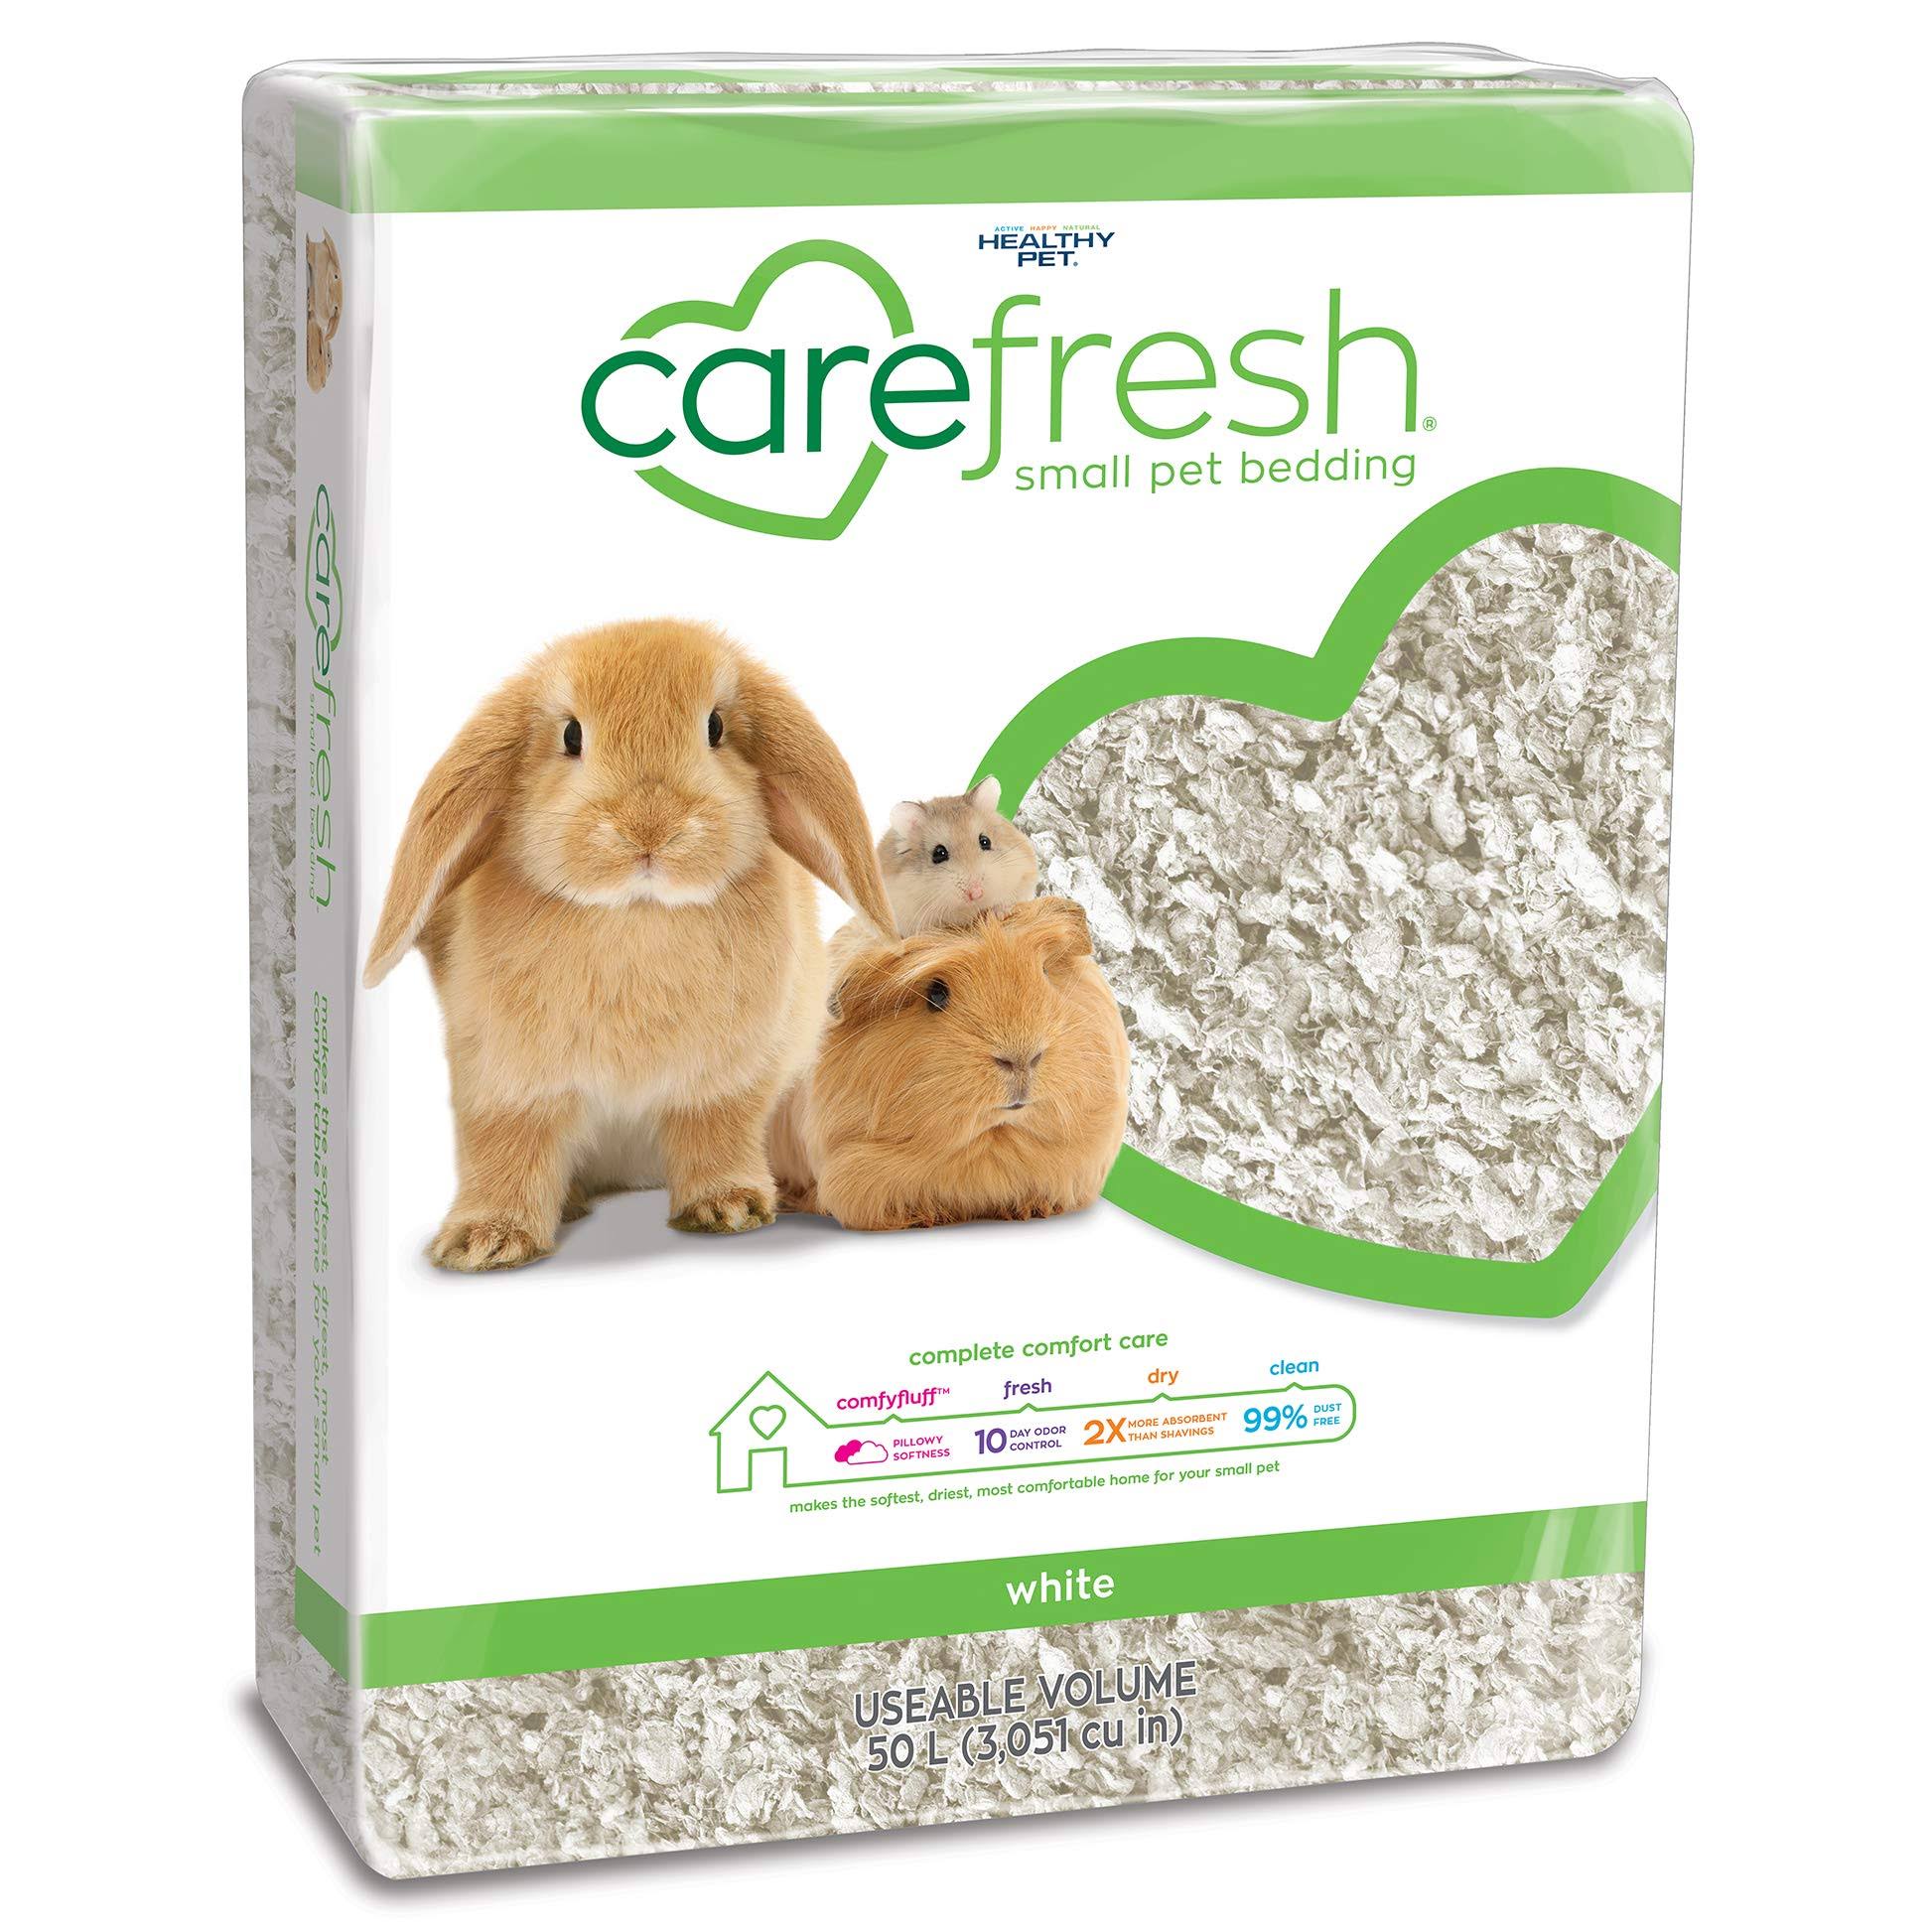 carefresh White Small Pet Bedding Size: 50 L